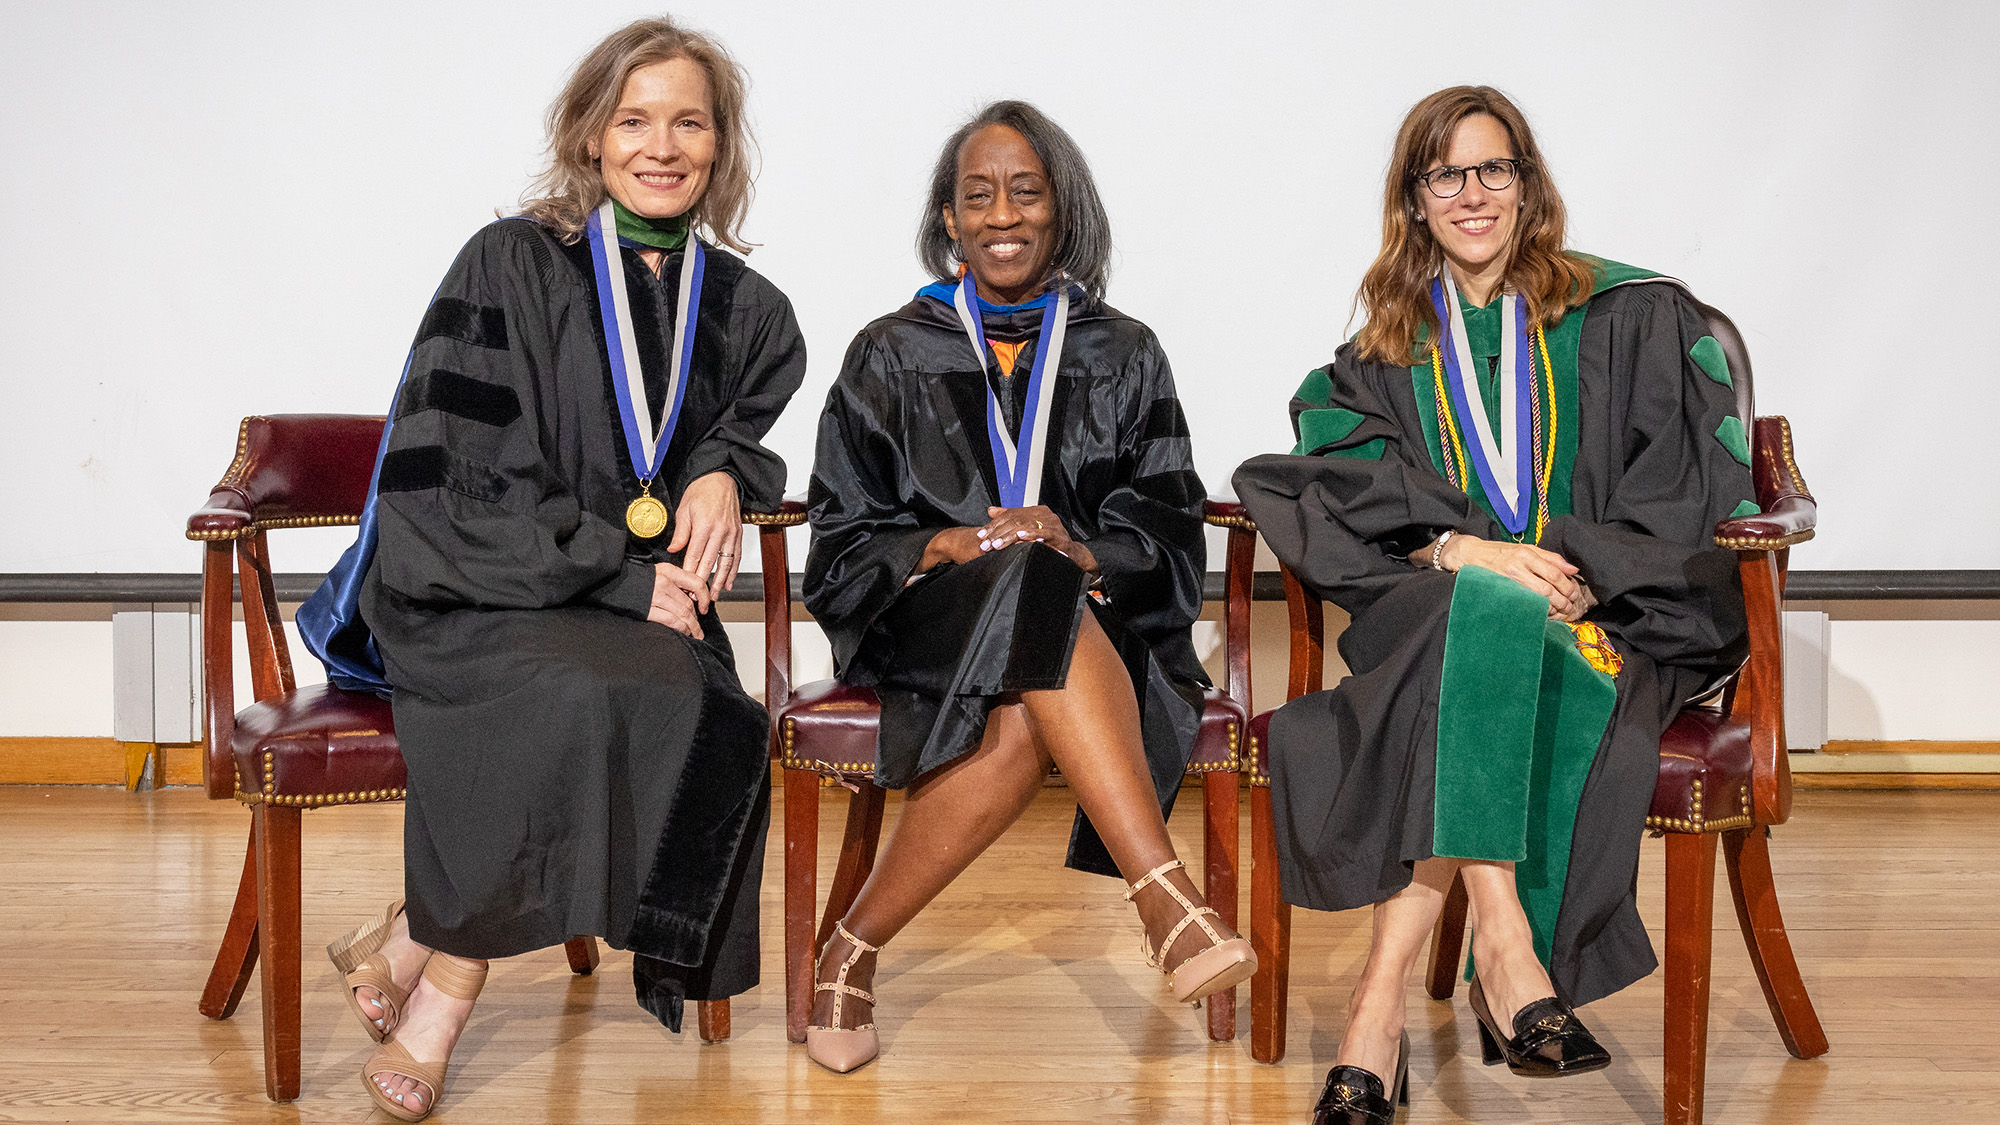 Three women dressed their academic regalia sit in chairs